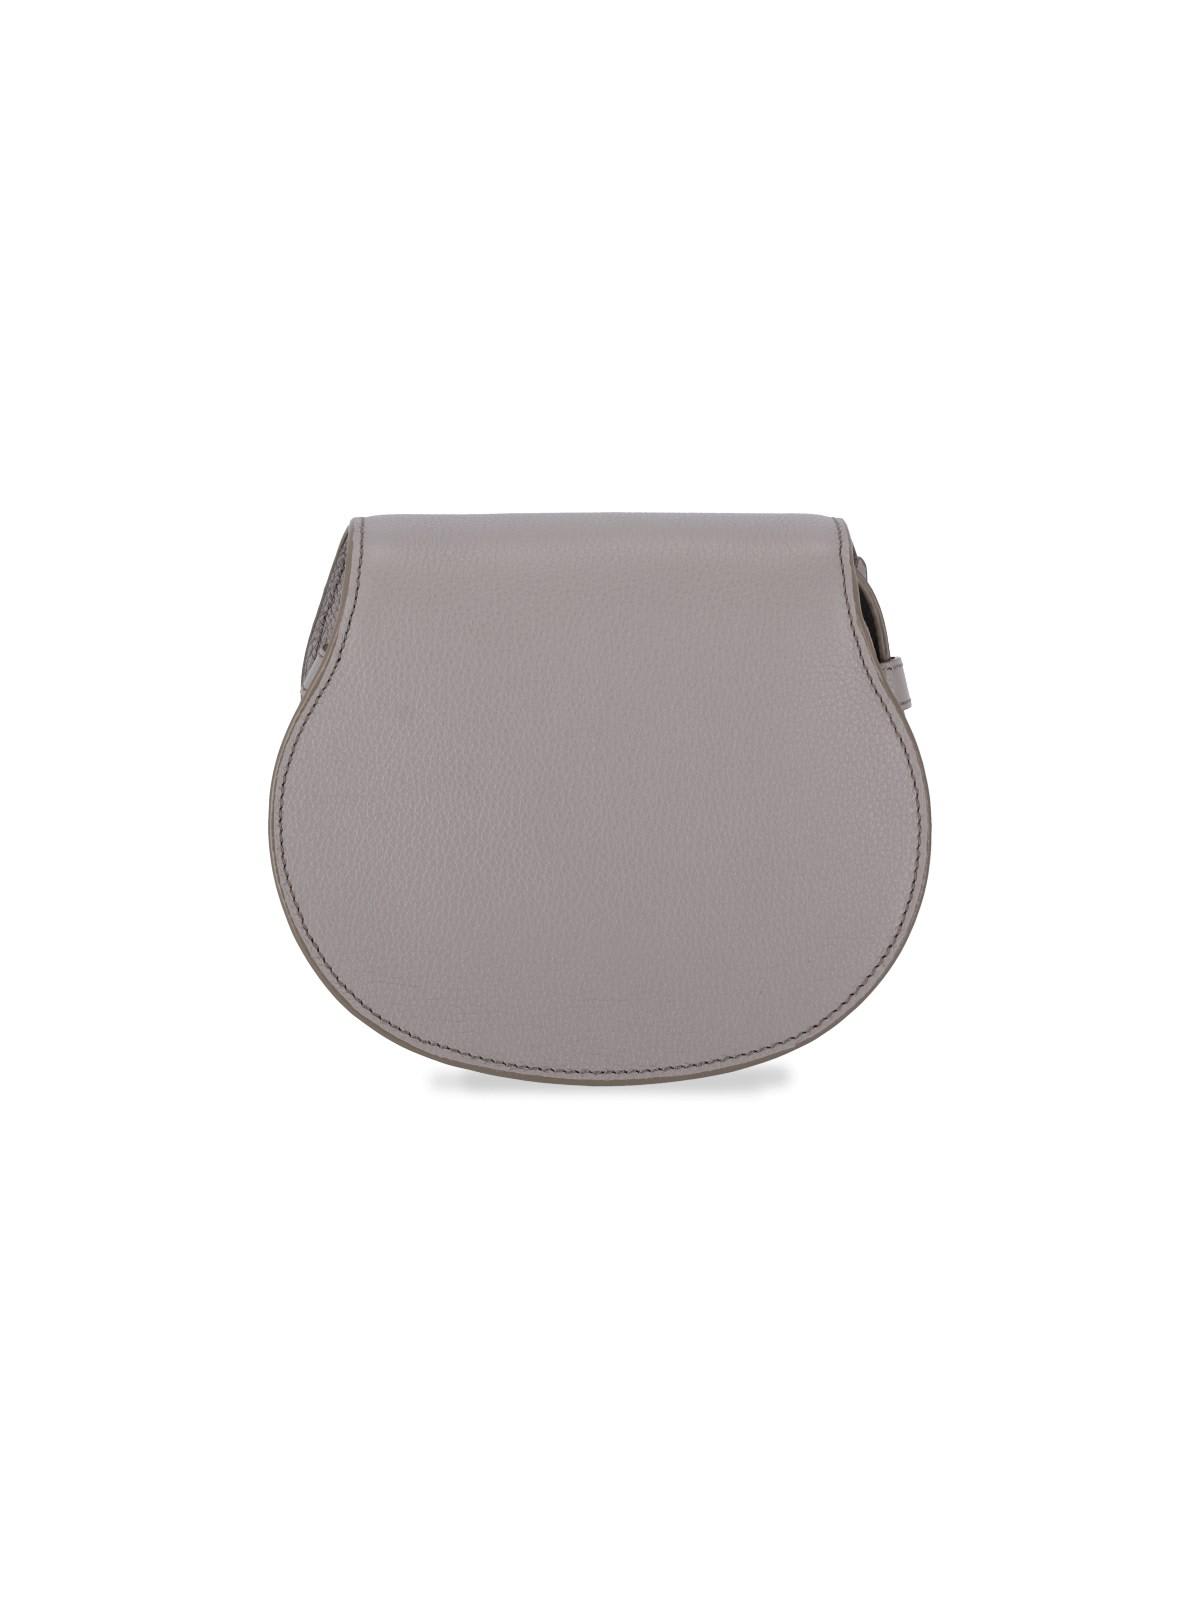 Chloé Small Shoulder Bag Marcie In Gray